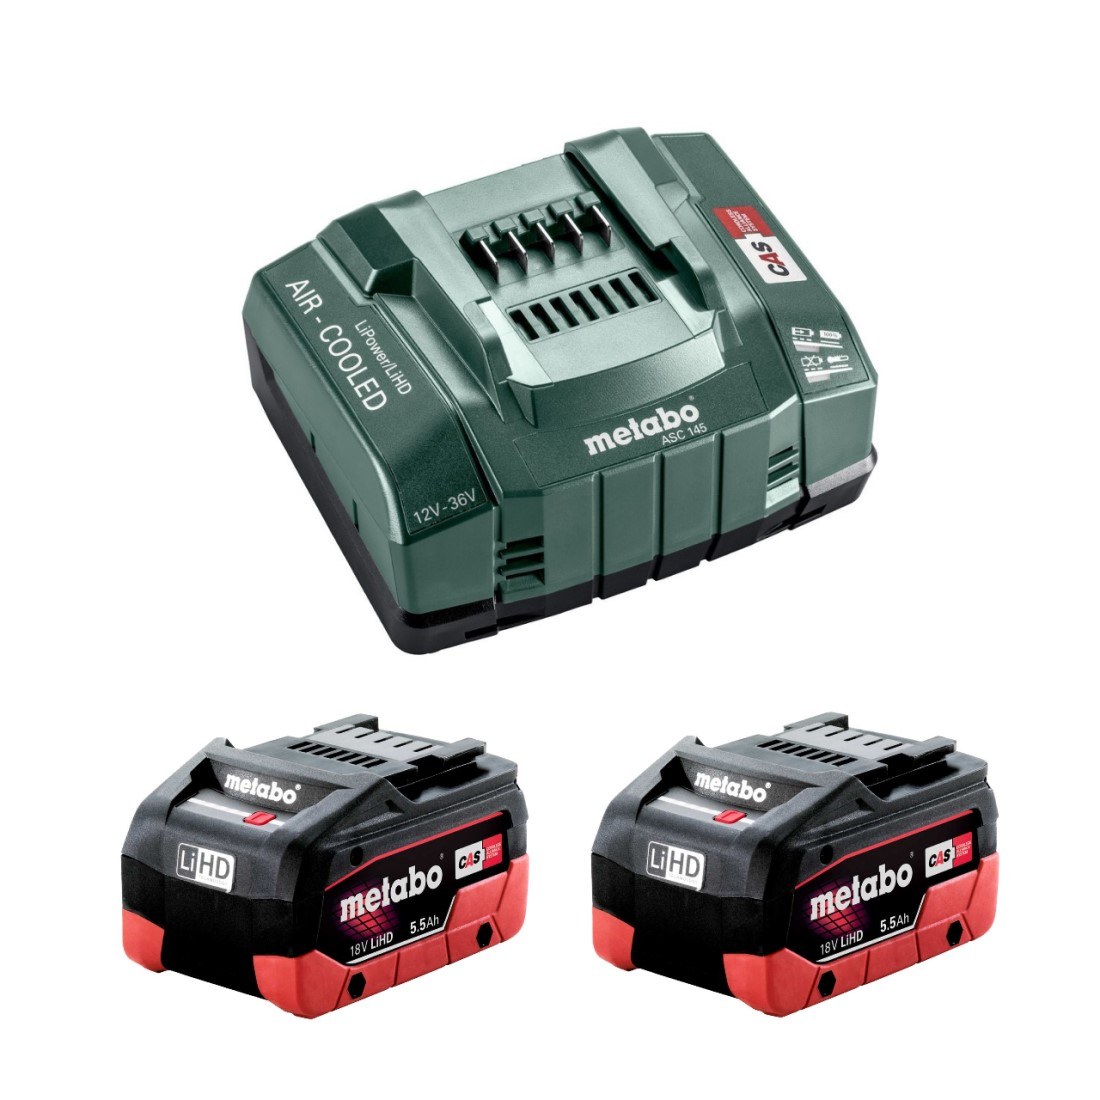 Powertool Batteries 18v LiHD 2x inc | ASC 685122380 Basic 145 World 5.5Ah & Set Charger Metabo